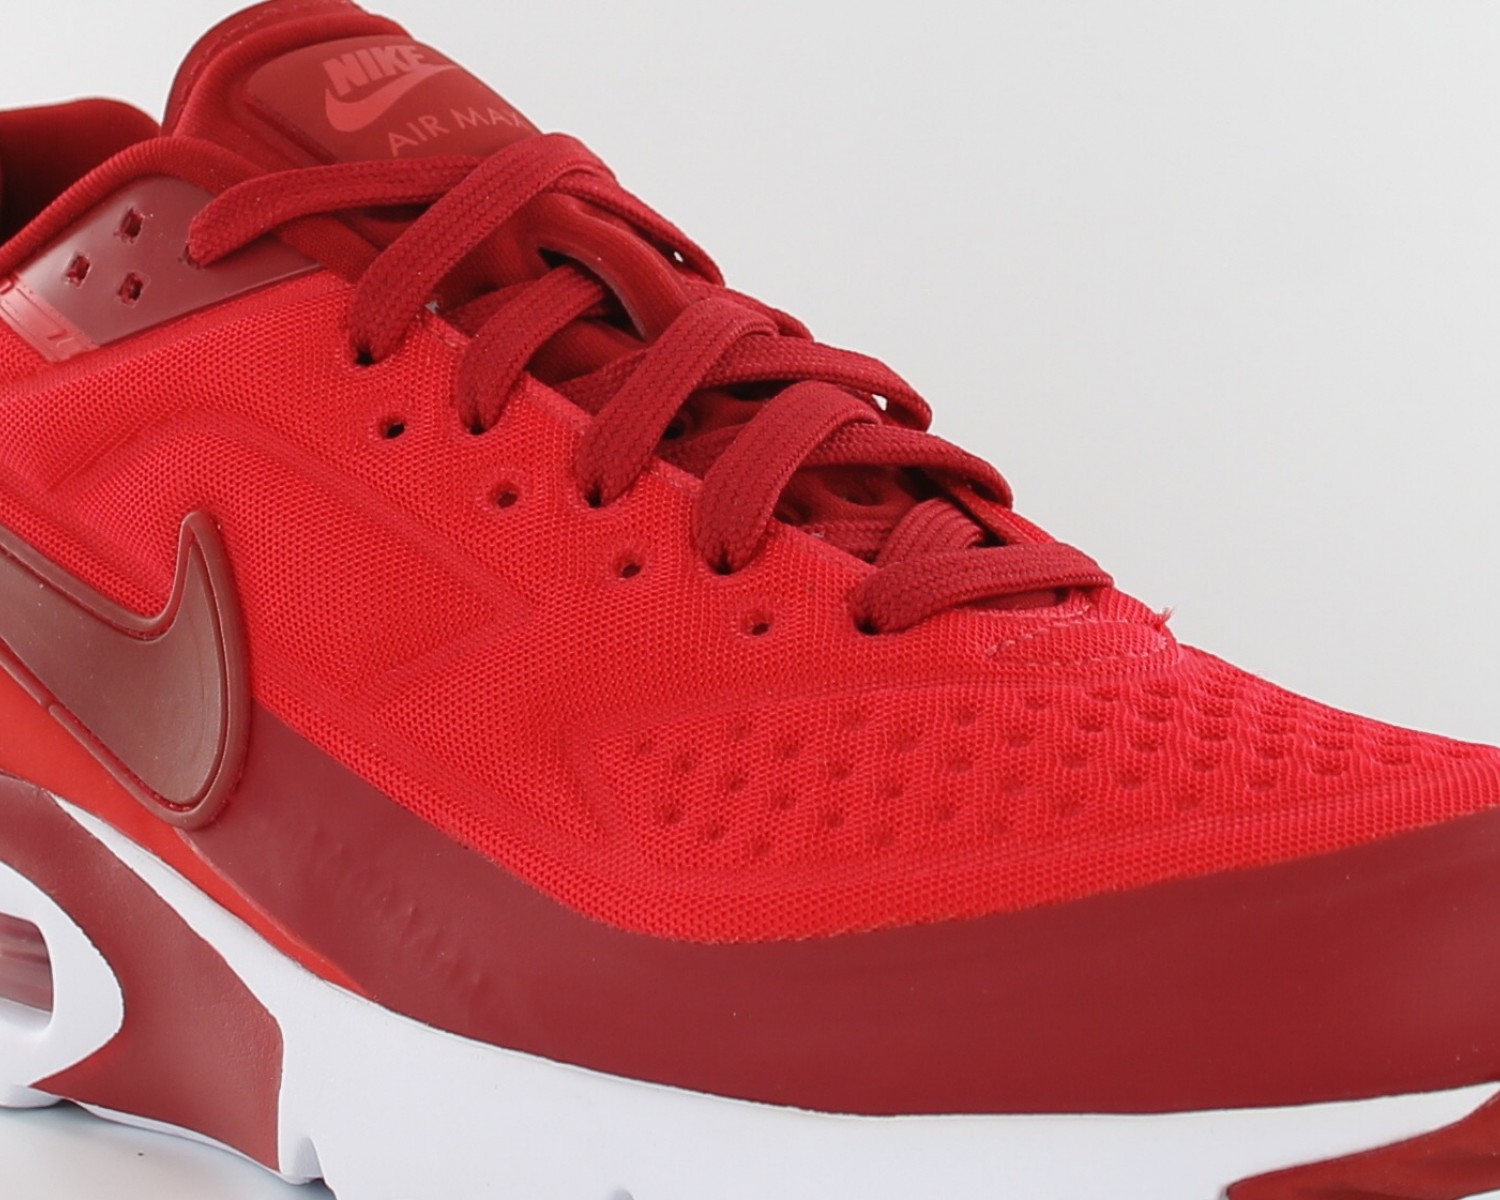 Nike Air max bw ultra se Rouge-rouge